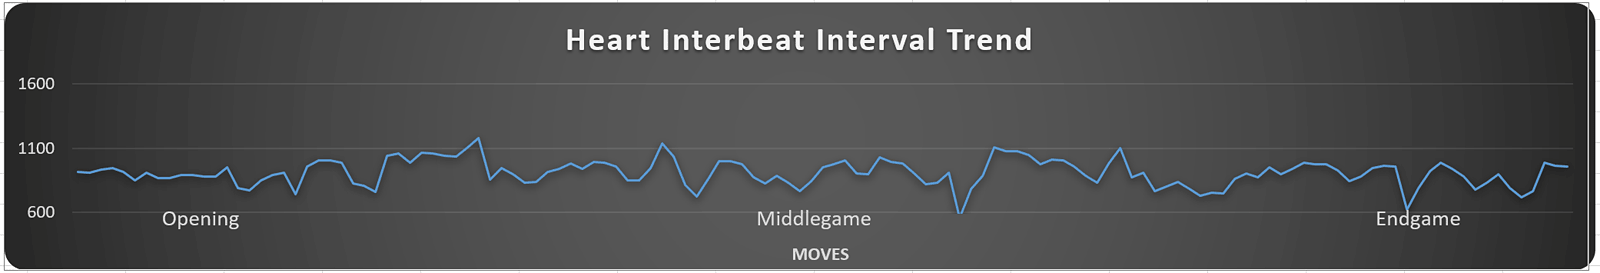 Heart interbeat interval trend